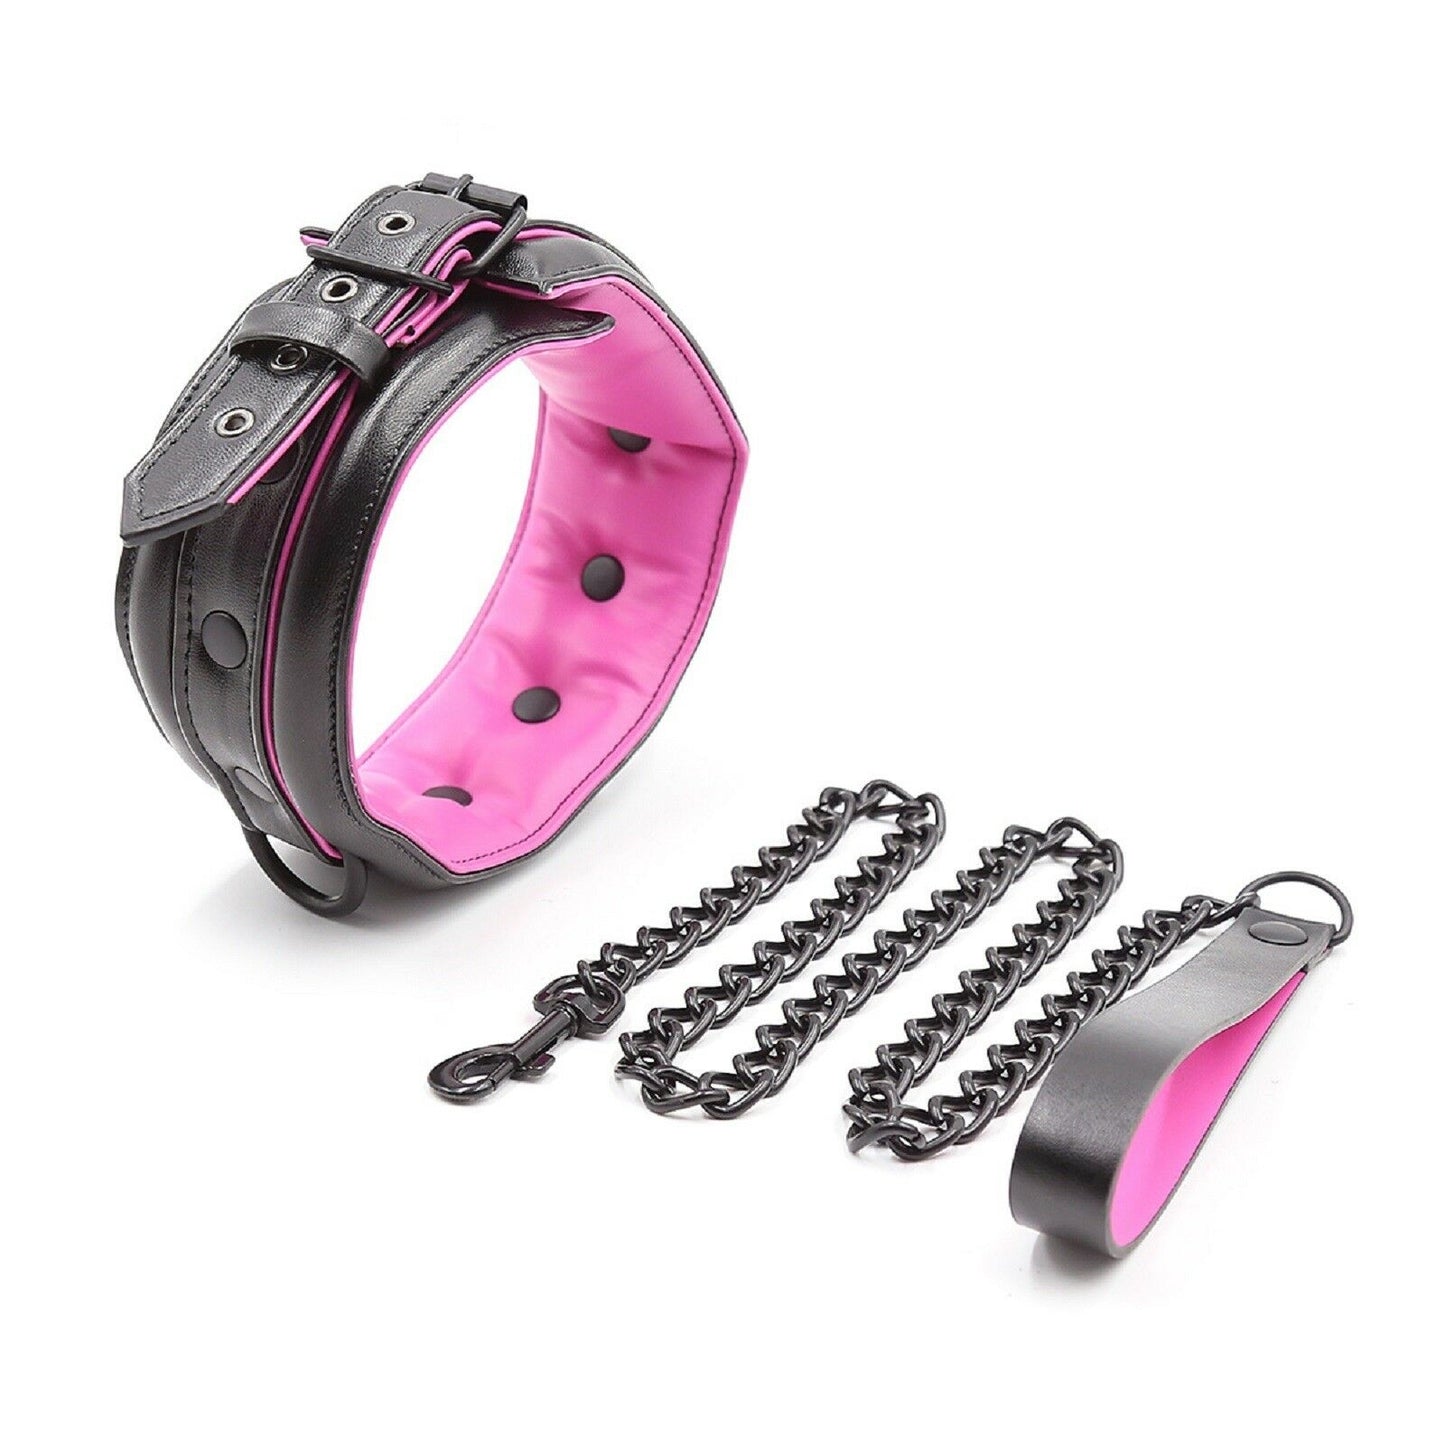 BDSM PU Leather Collar Leash Handcuffs Bondage Restraint Kit Couples Sex Toy NEW